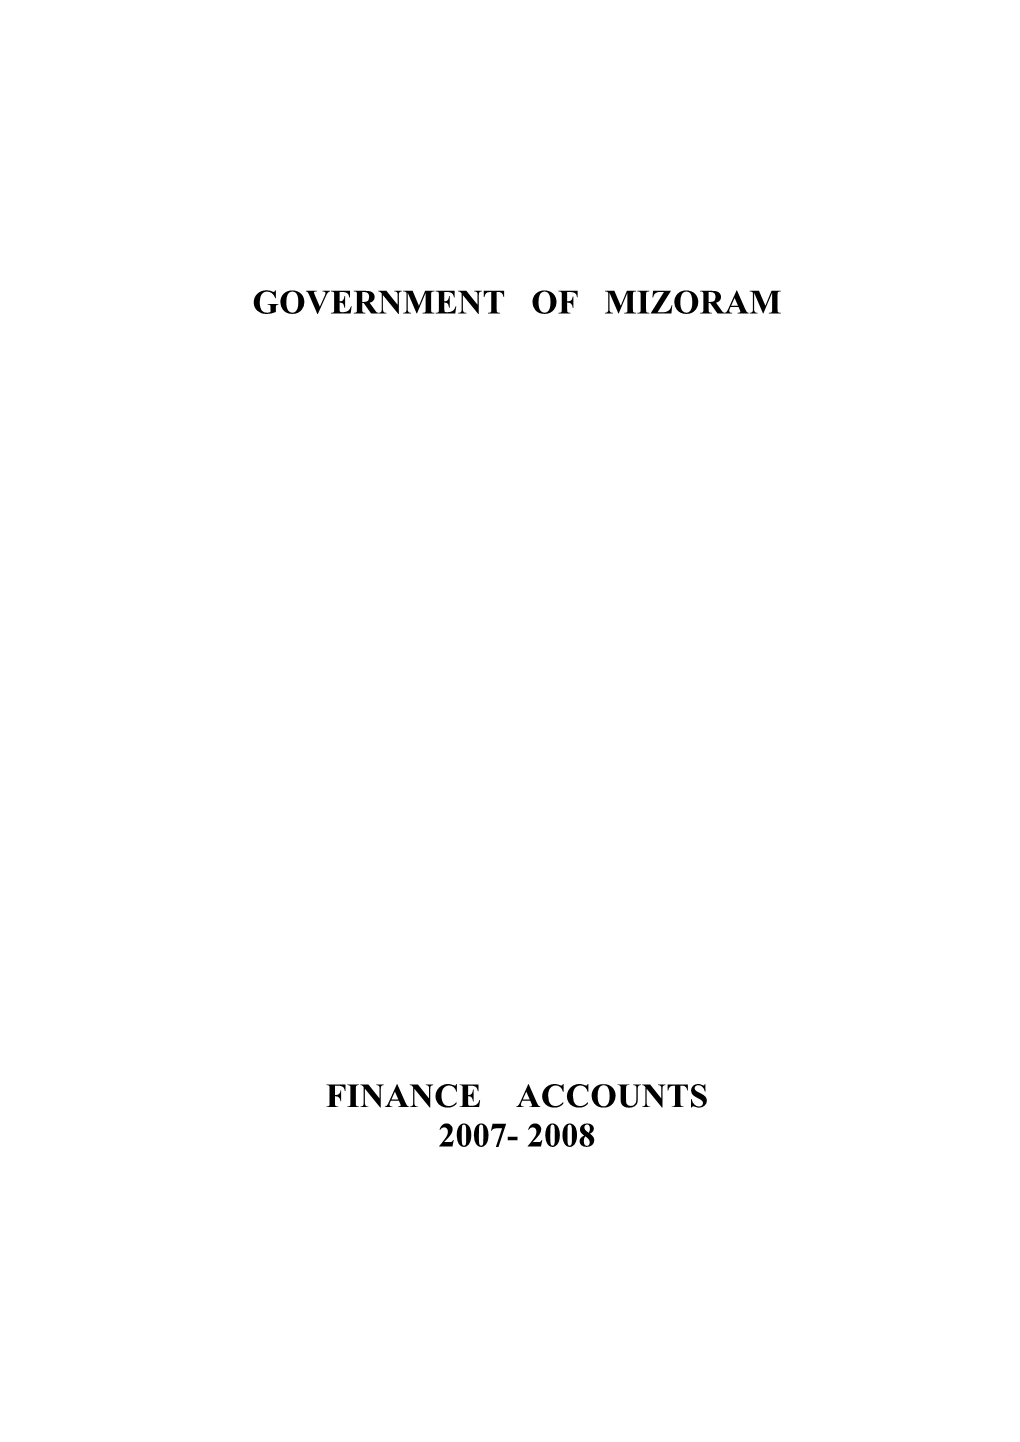 Government of Mizoram Finance Accounts 2007